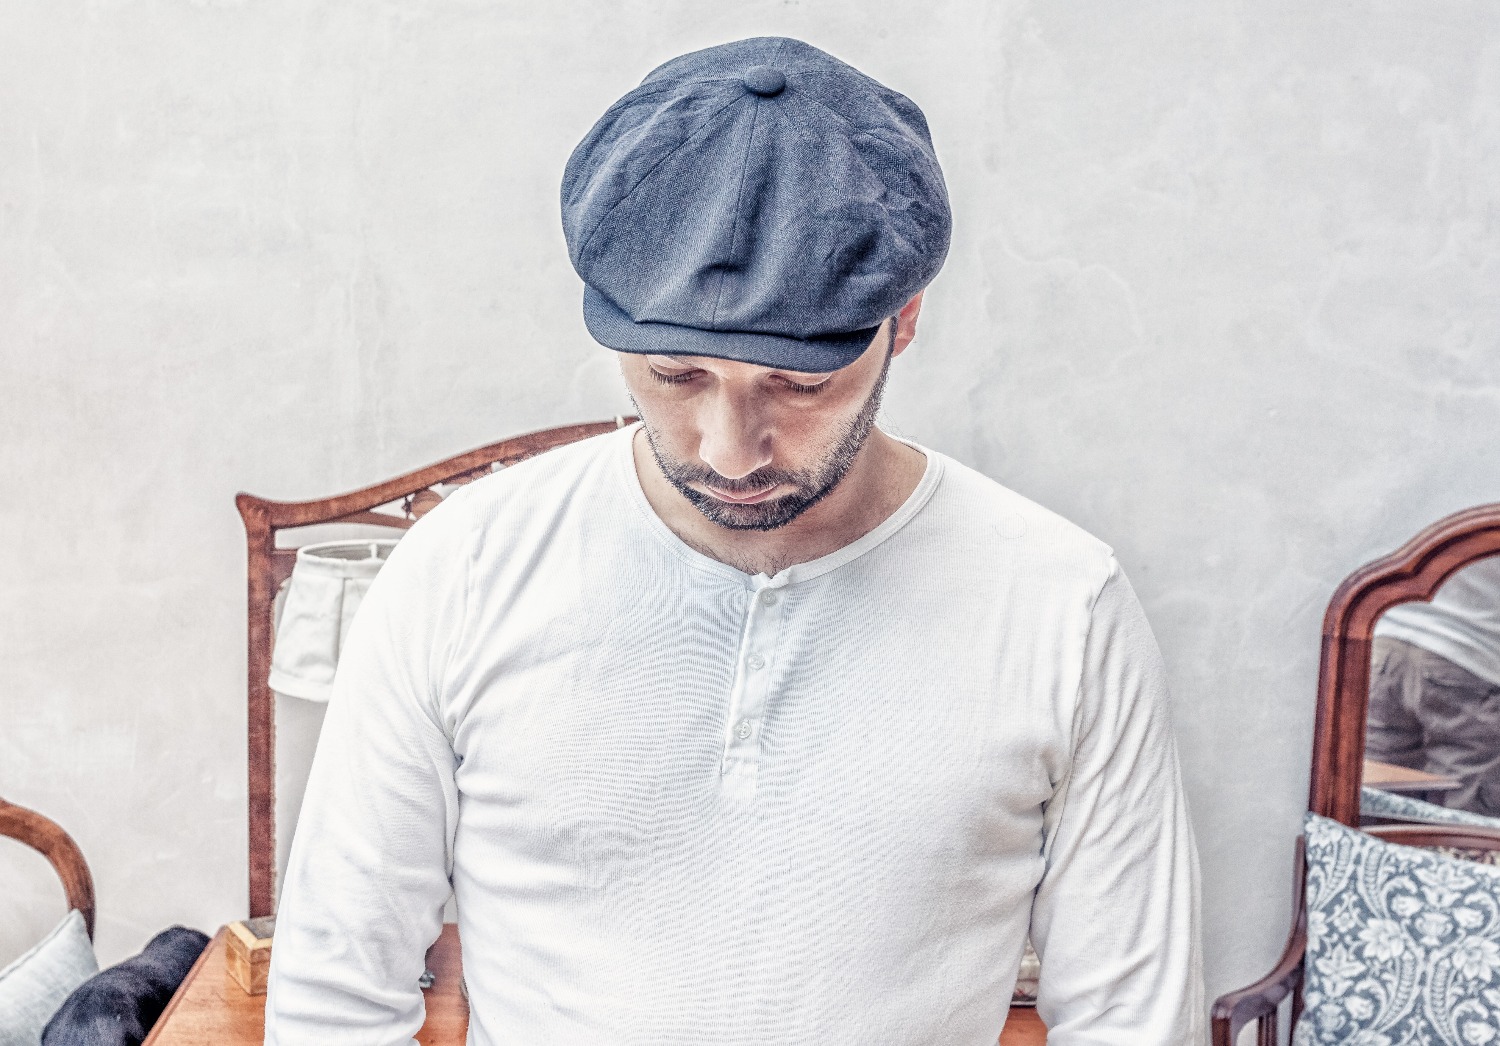 Caps for beard wearers: The slouchy cap